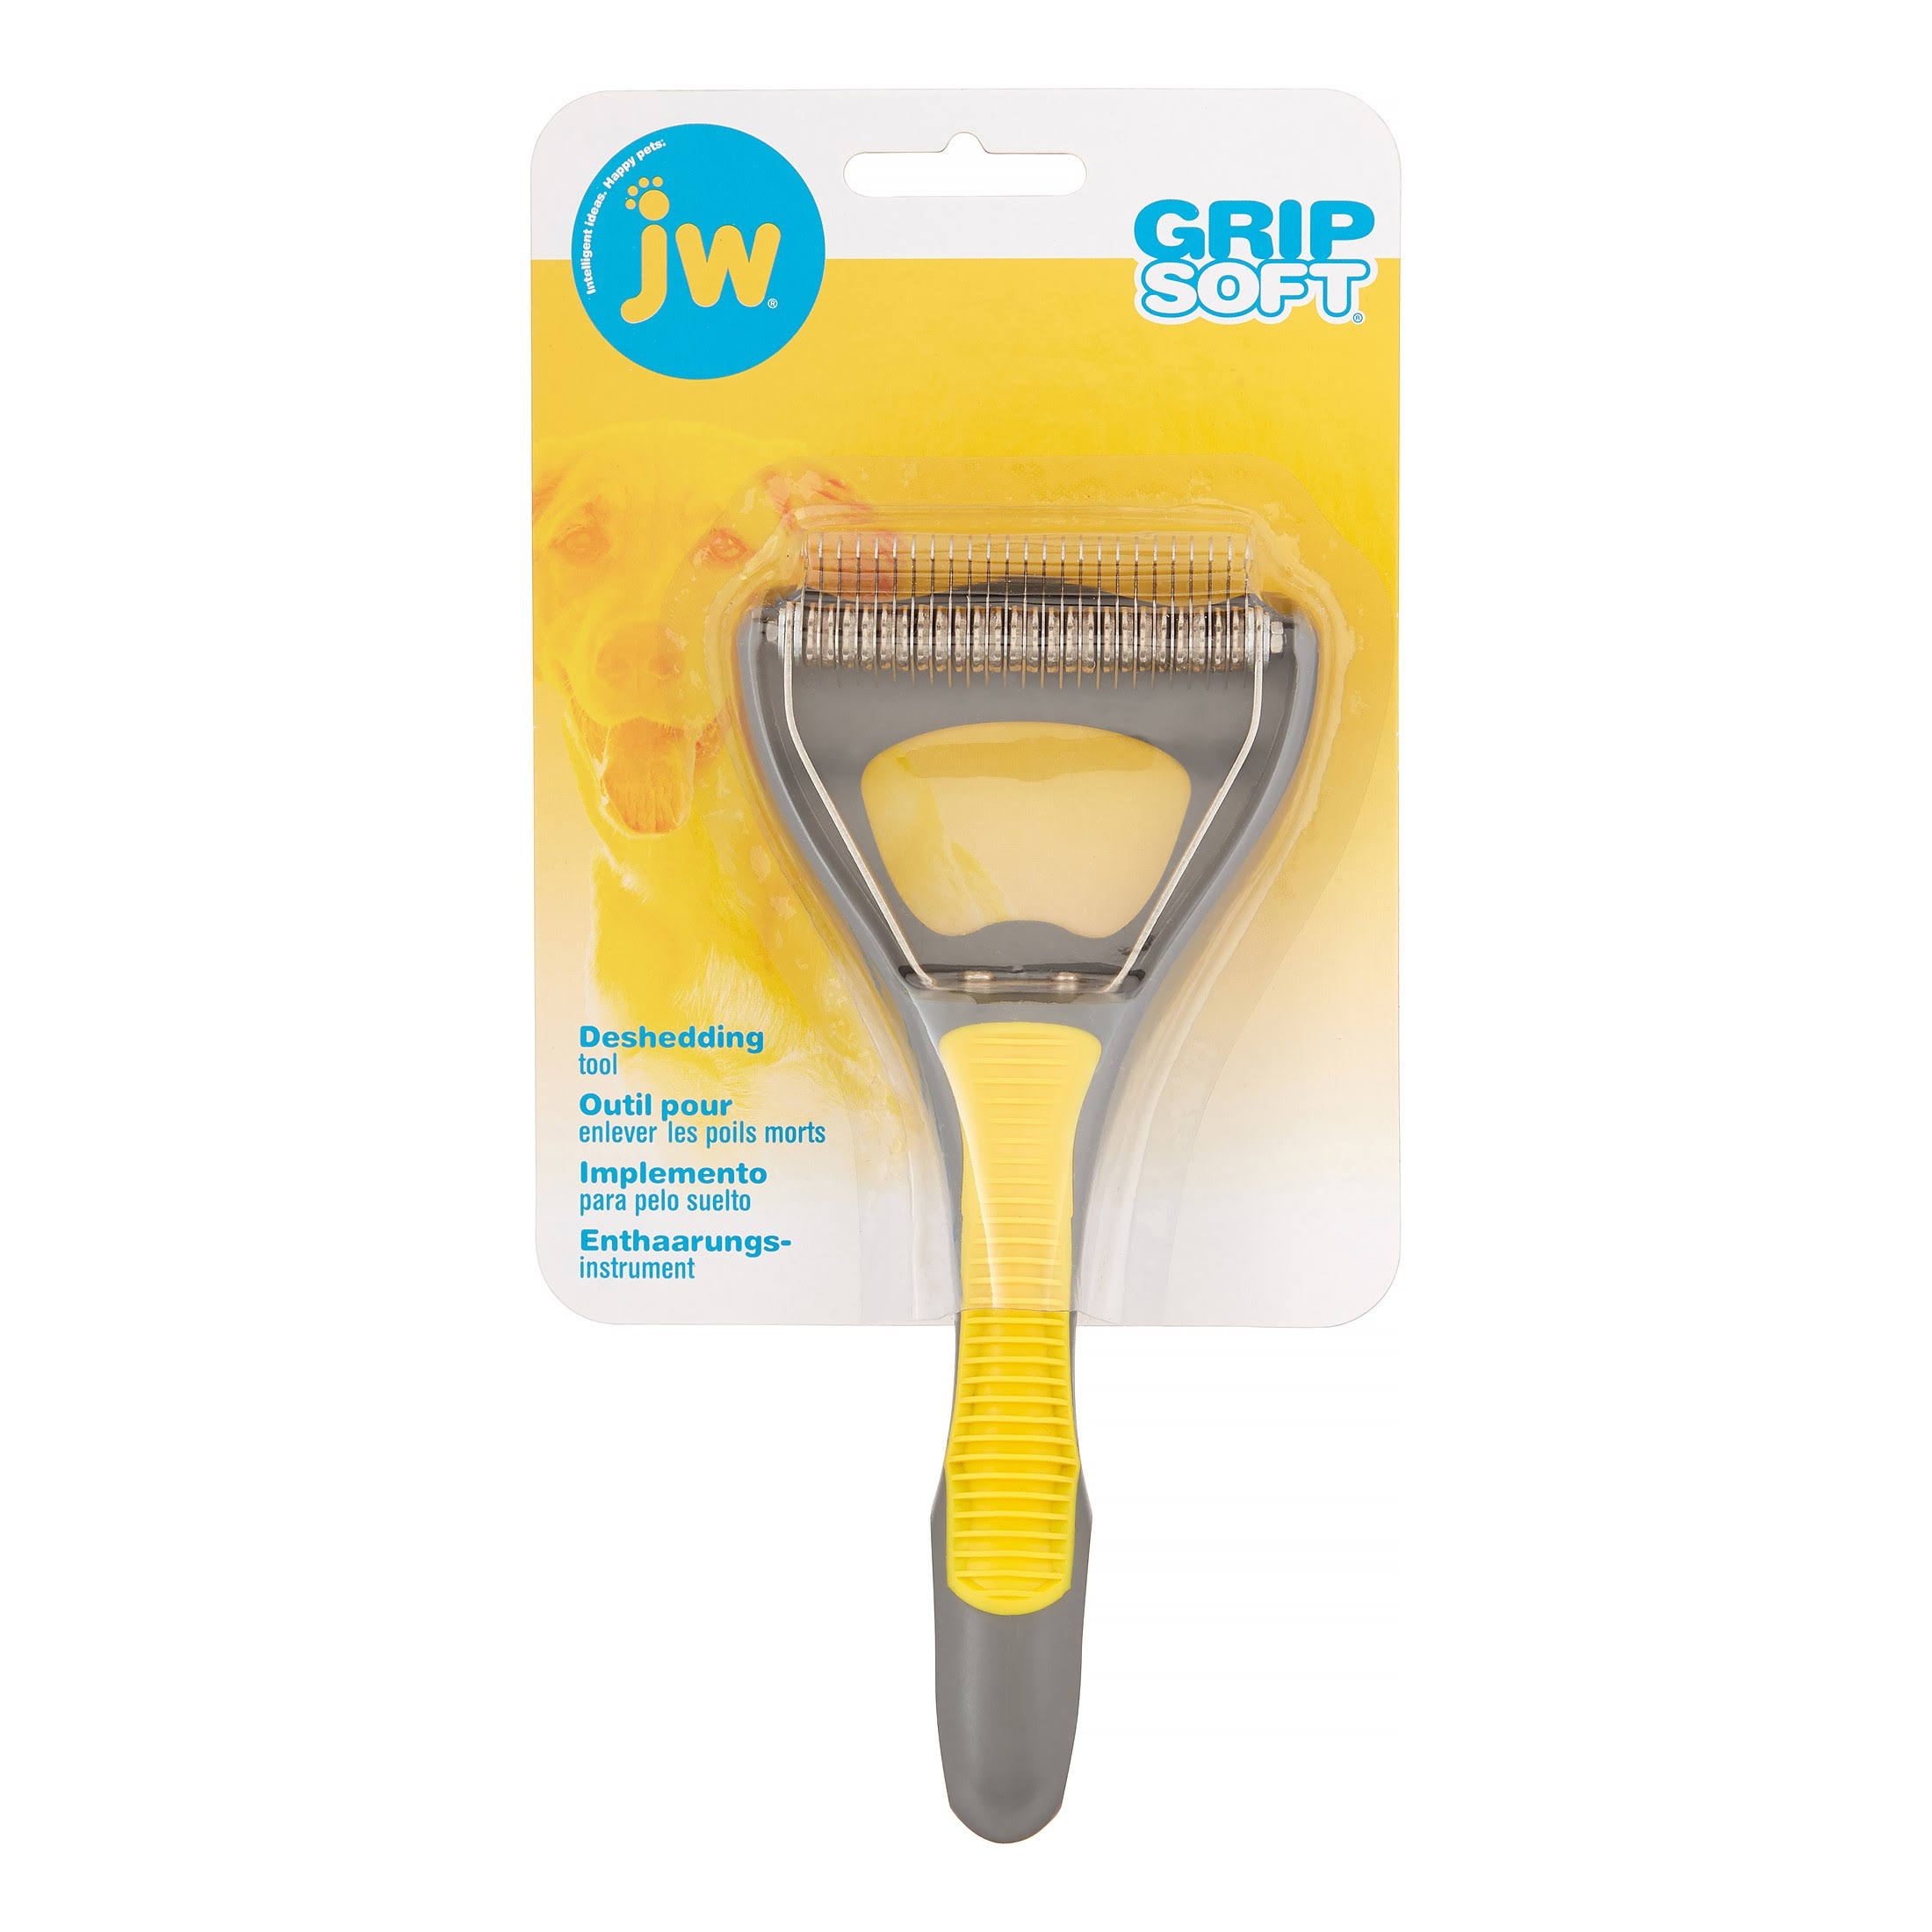 JW Grip Soft Deshedding Tool